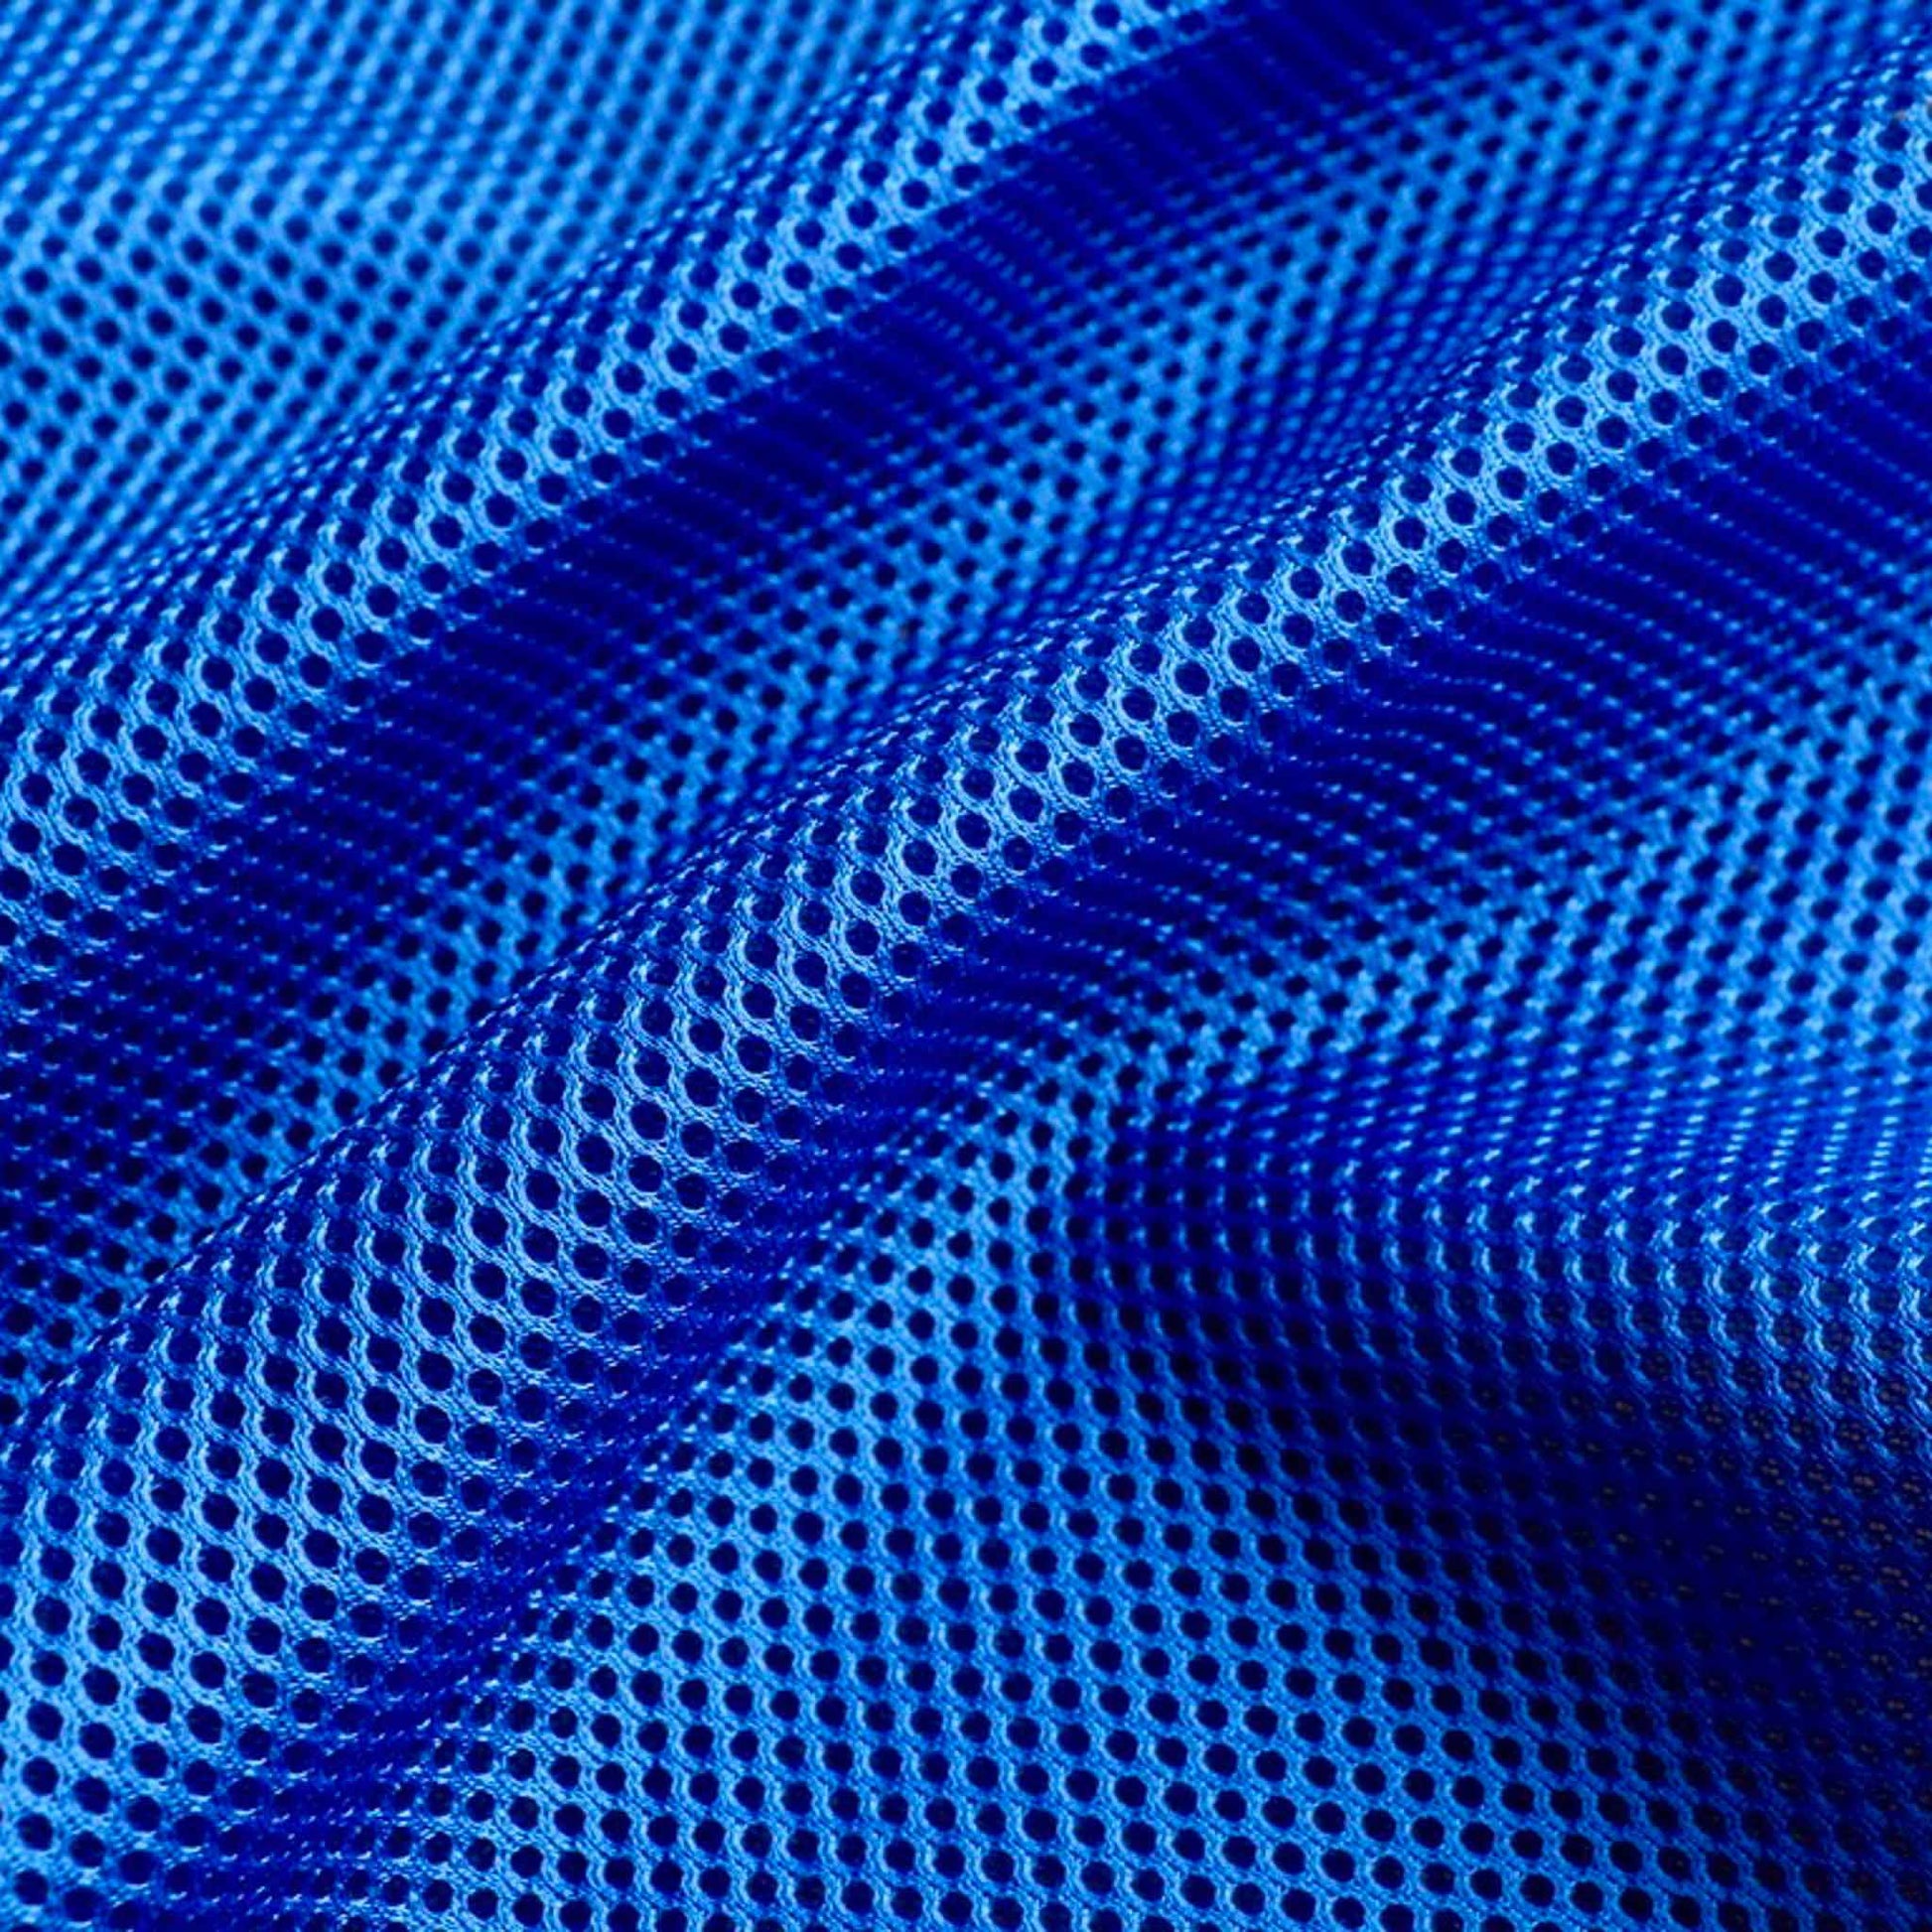 3D Spacer Mesh Fabric - Maroon, Royal blue, black, dusty pink or Khaki green